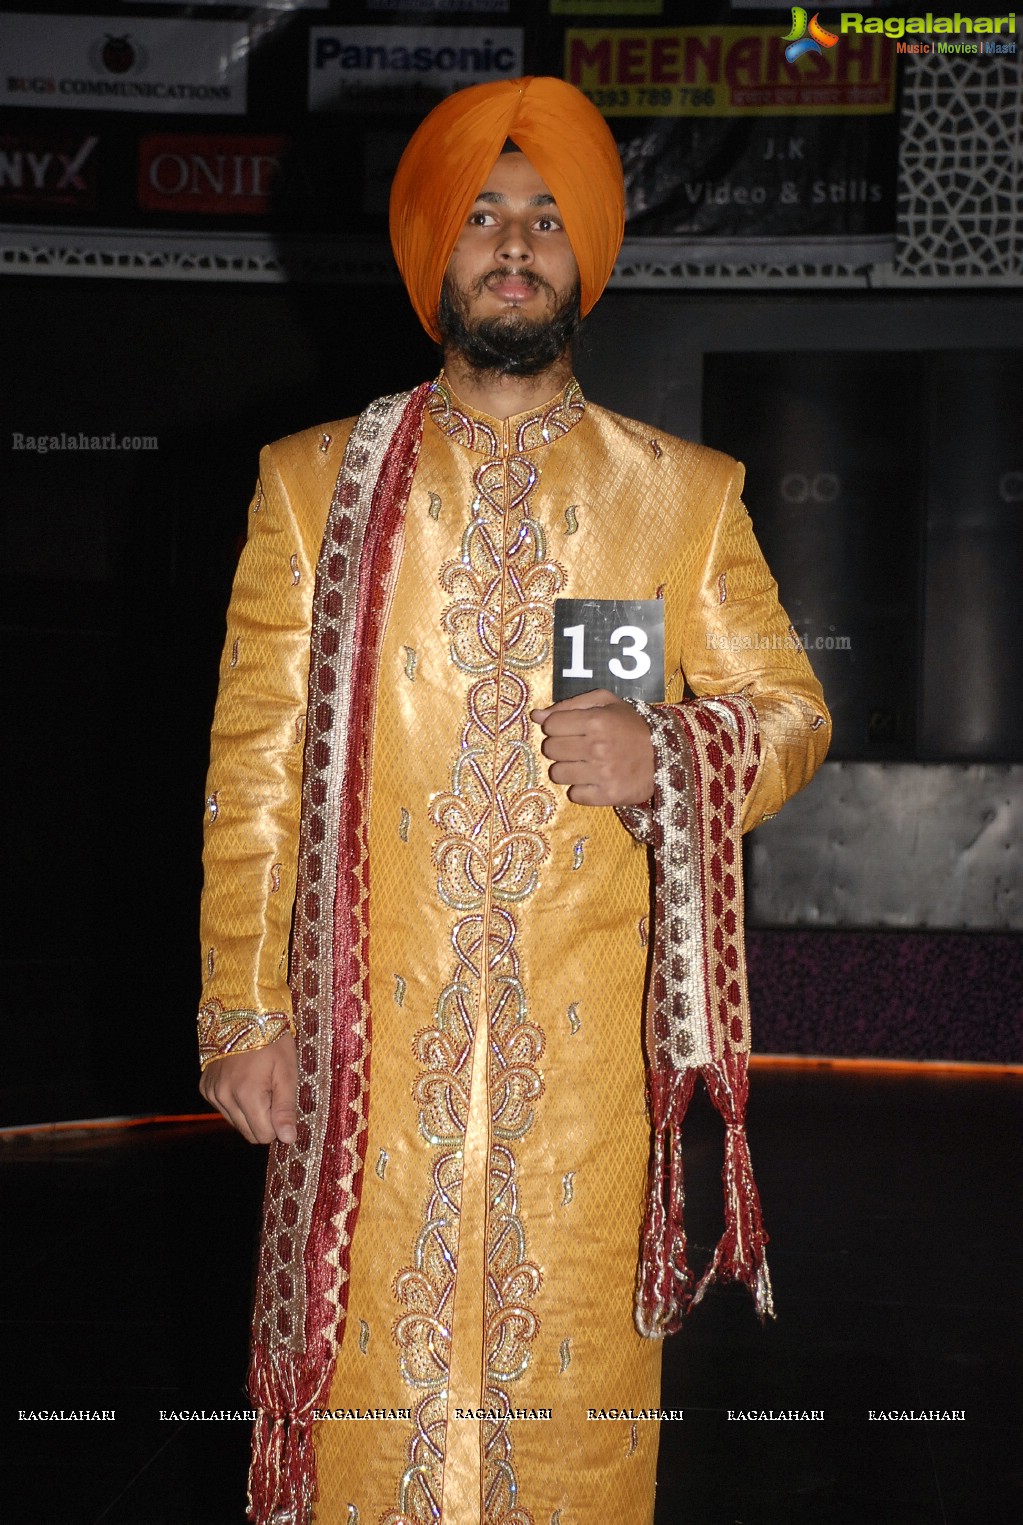 Mr.Turbanator 2011 Fashion Show